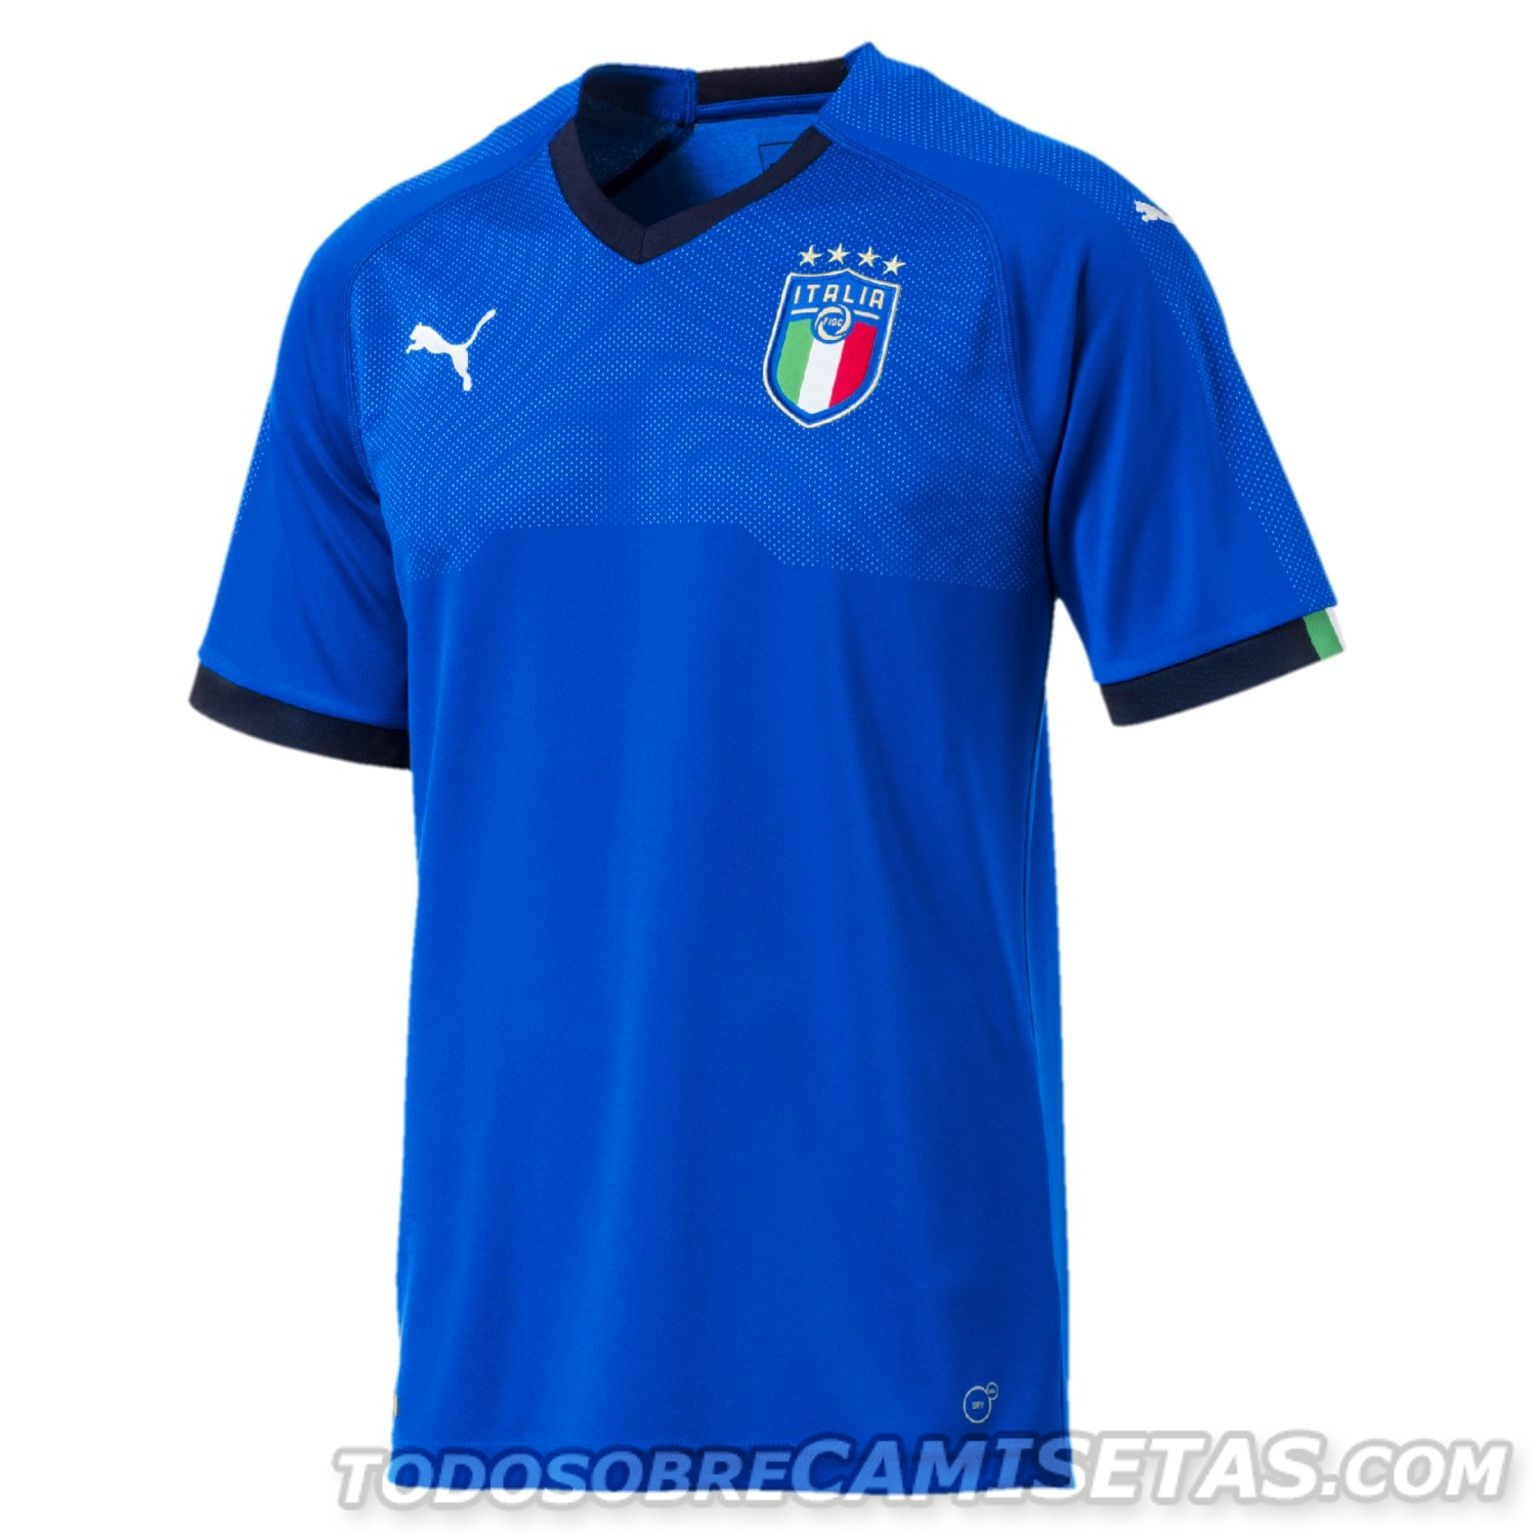 Italy 2018 PUMA Home Kit - Todo Sobre Camisetas